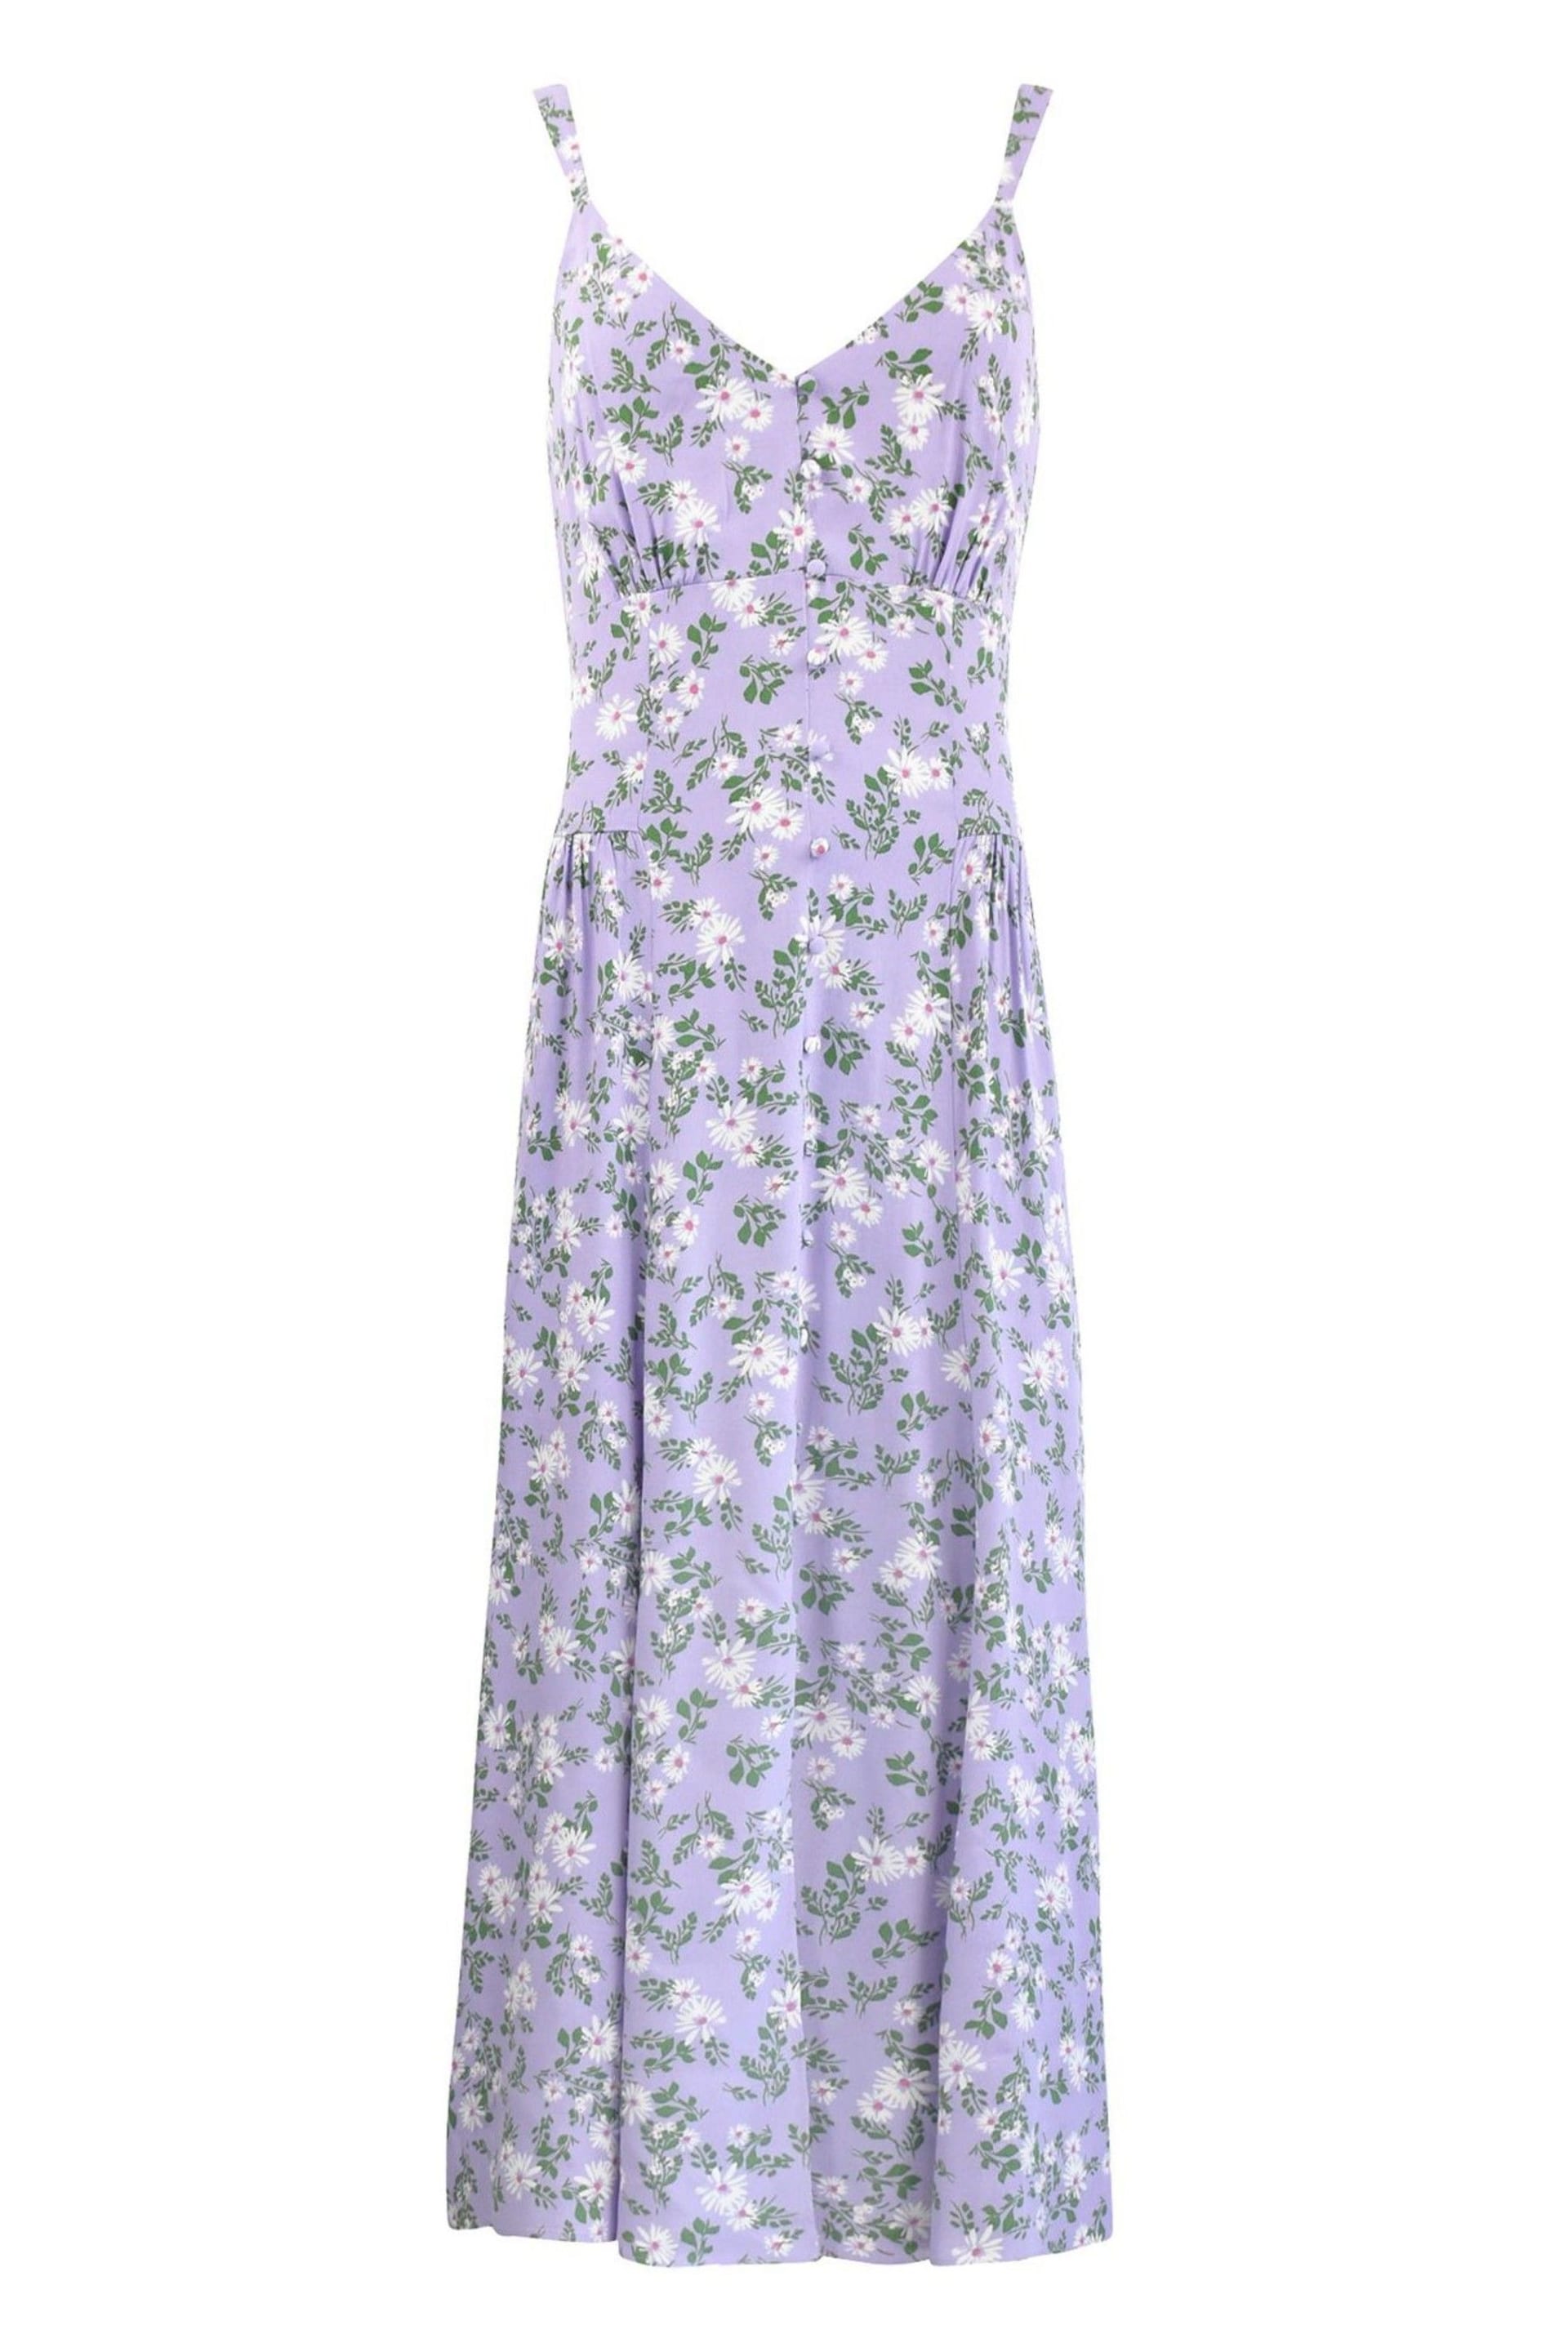 Ro&Zo Purple Ditsy Print Strappy Button Through Dress - Image 5 of 5